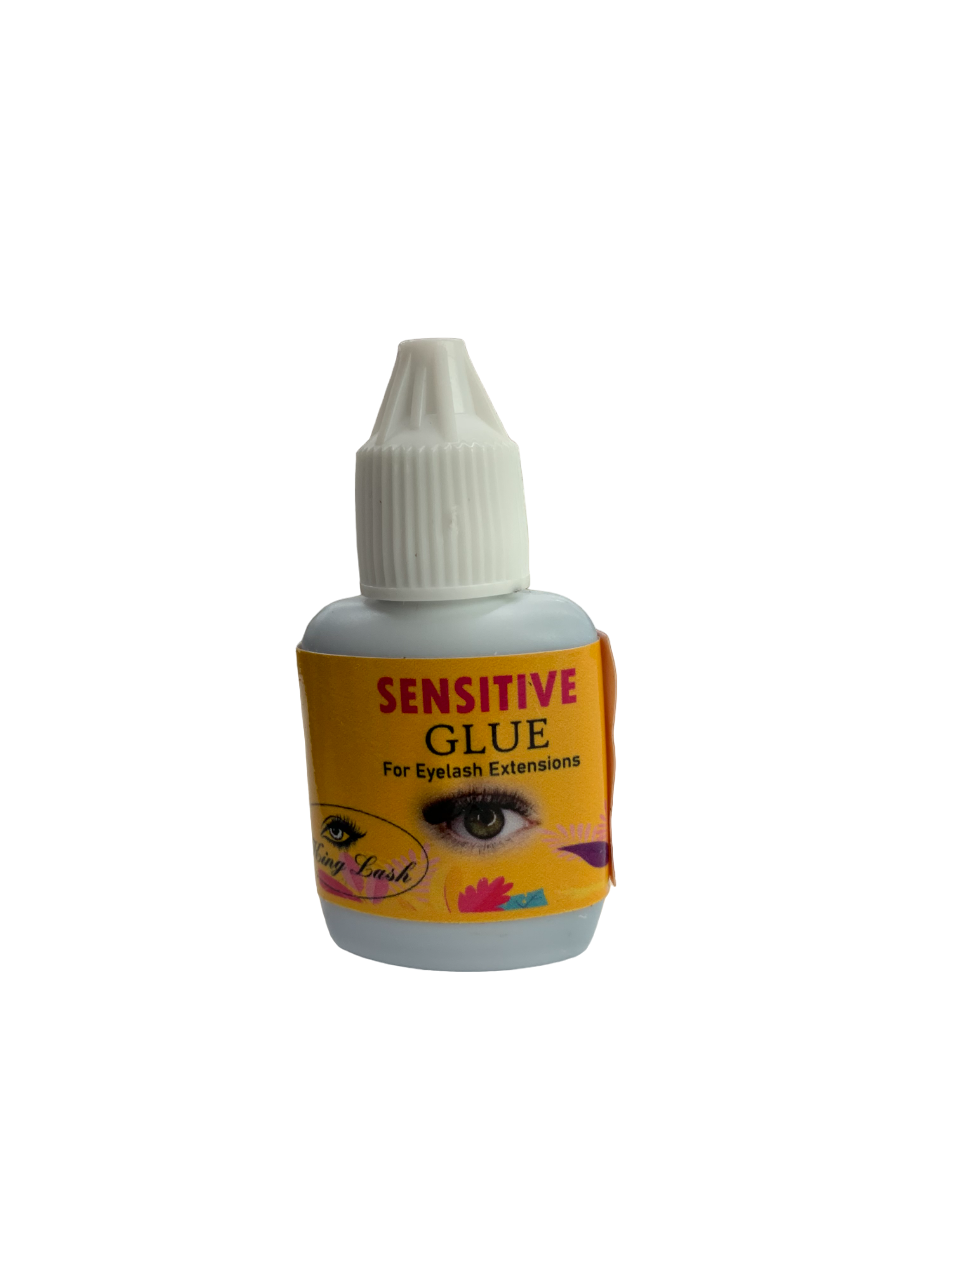 King Lash Sensitive Glue